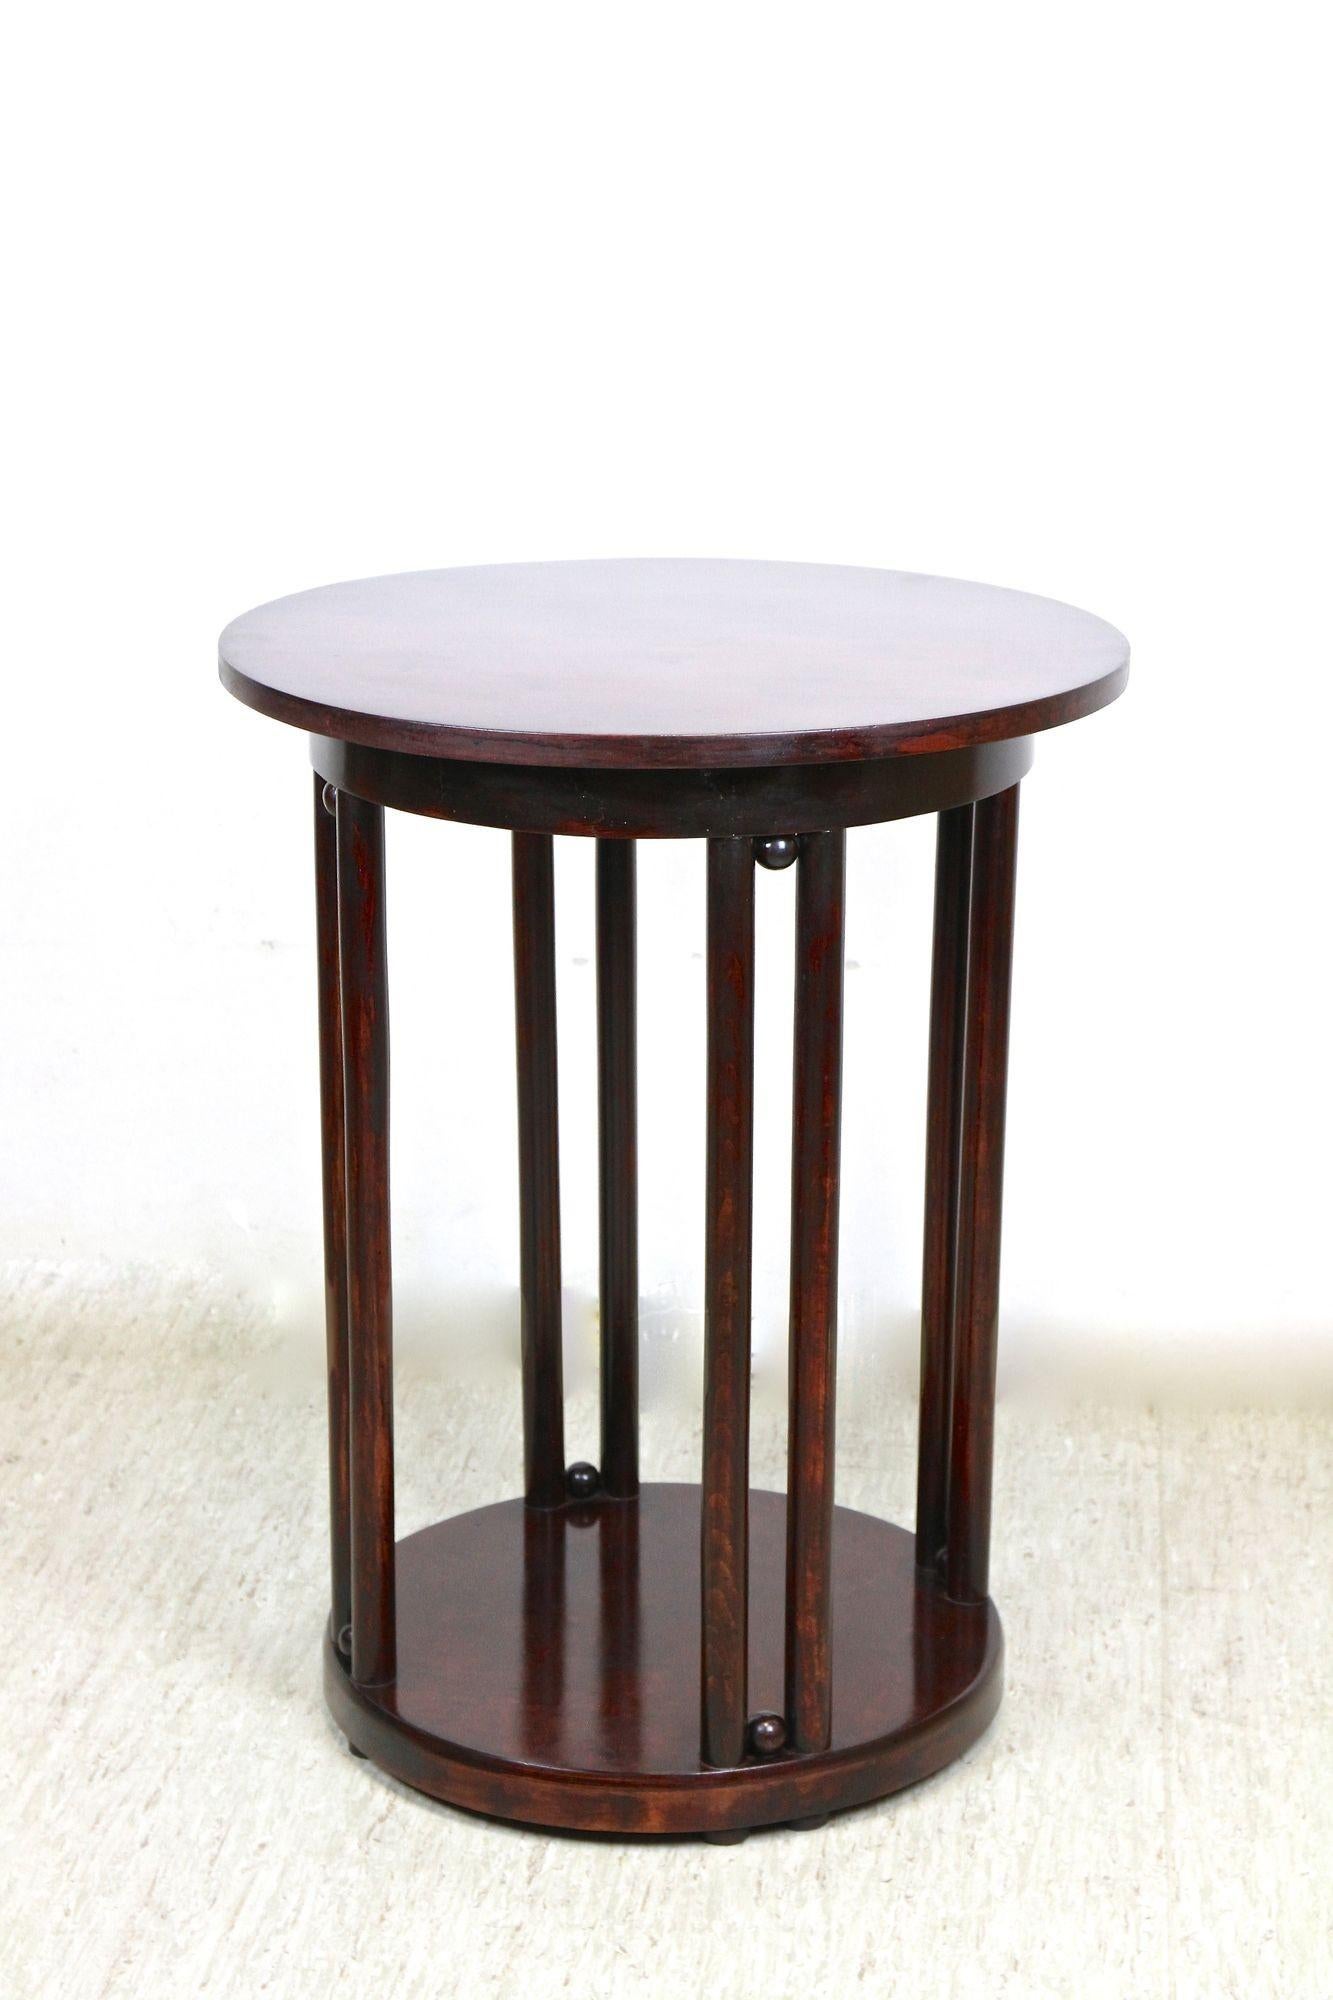 Beech Thonet Bentwood Side Table, Design by Josef Hoffmann, Austria ca. 1906 For Sale